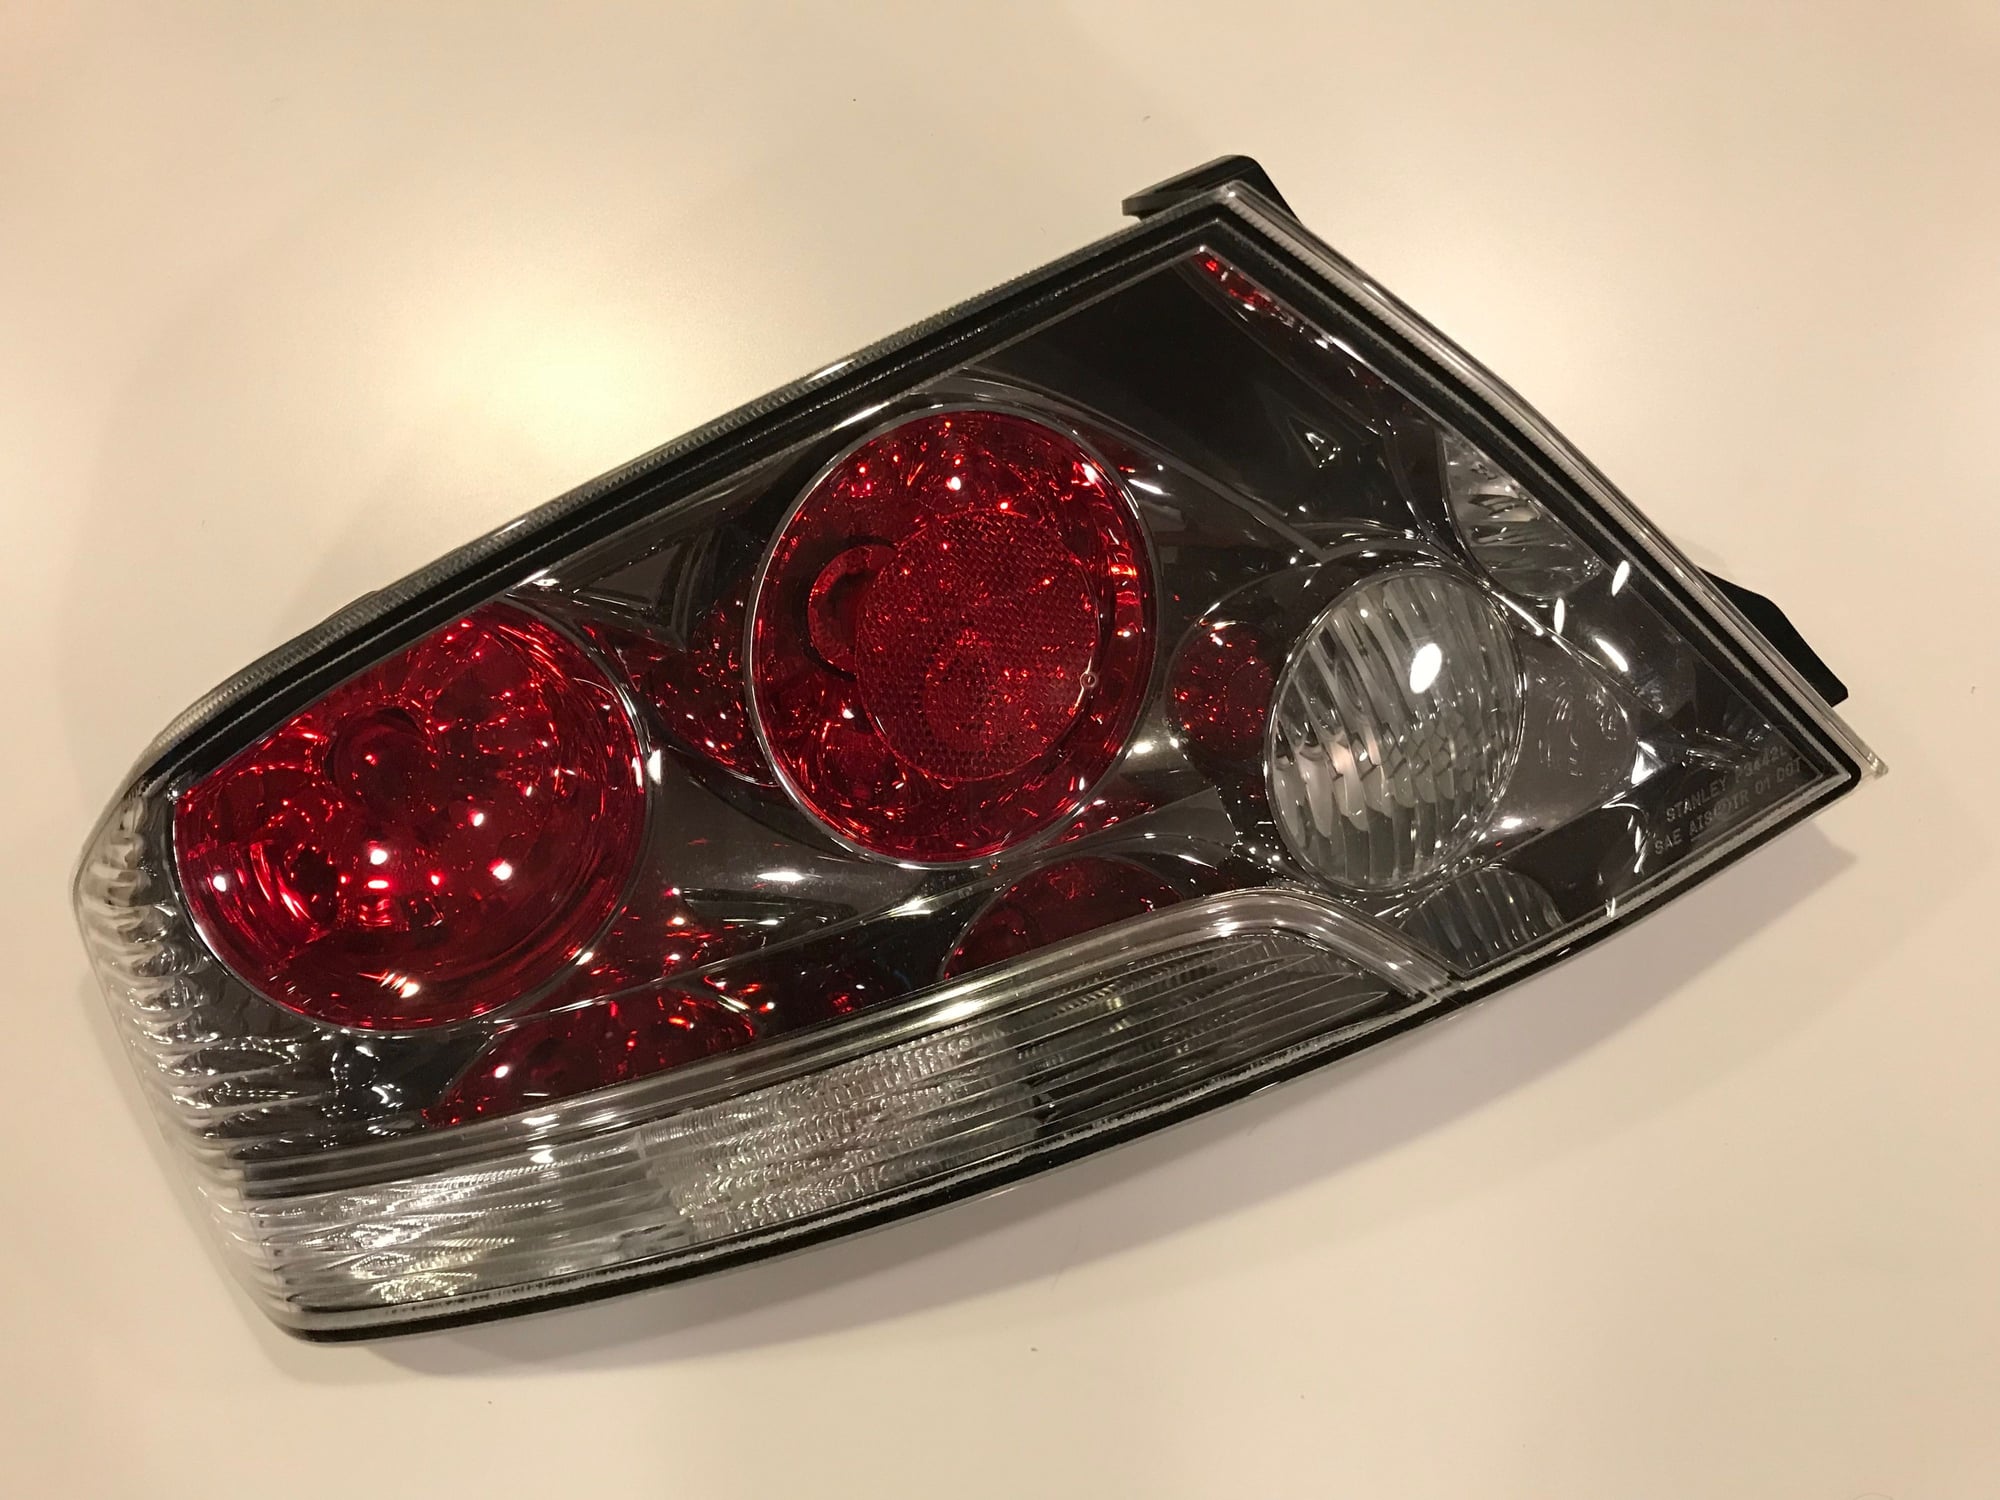 Lights - Evo VIII OEM Taillights - Used - 2003 to 2008 Mitsubishi Lancer Evolution - Yardley, PA 19067, United States